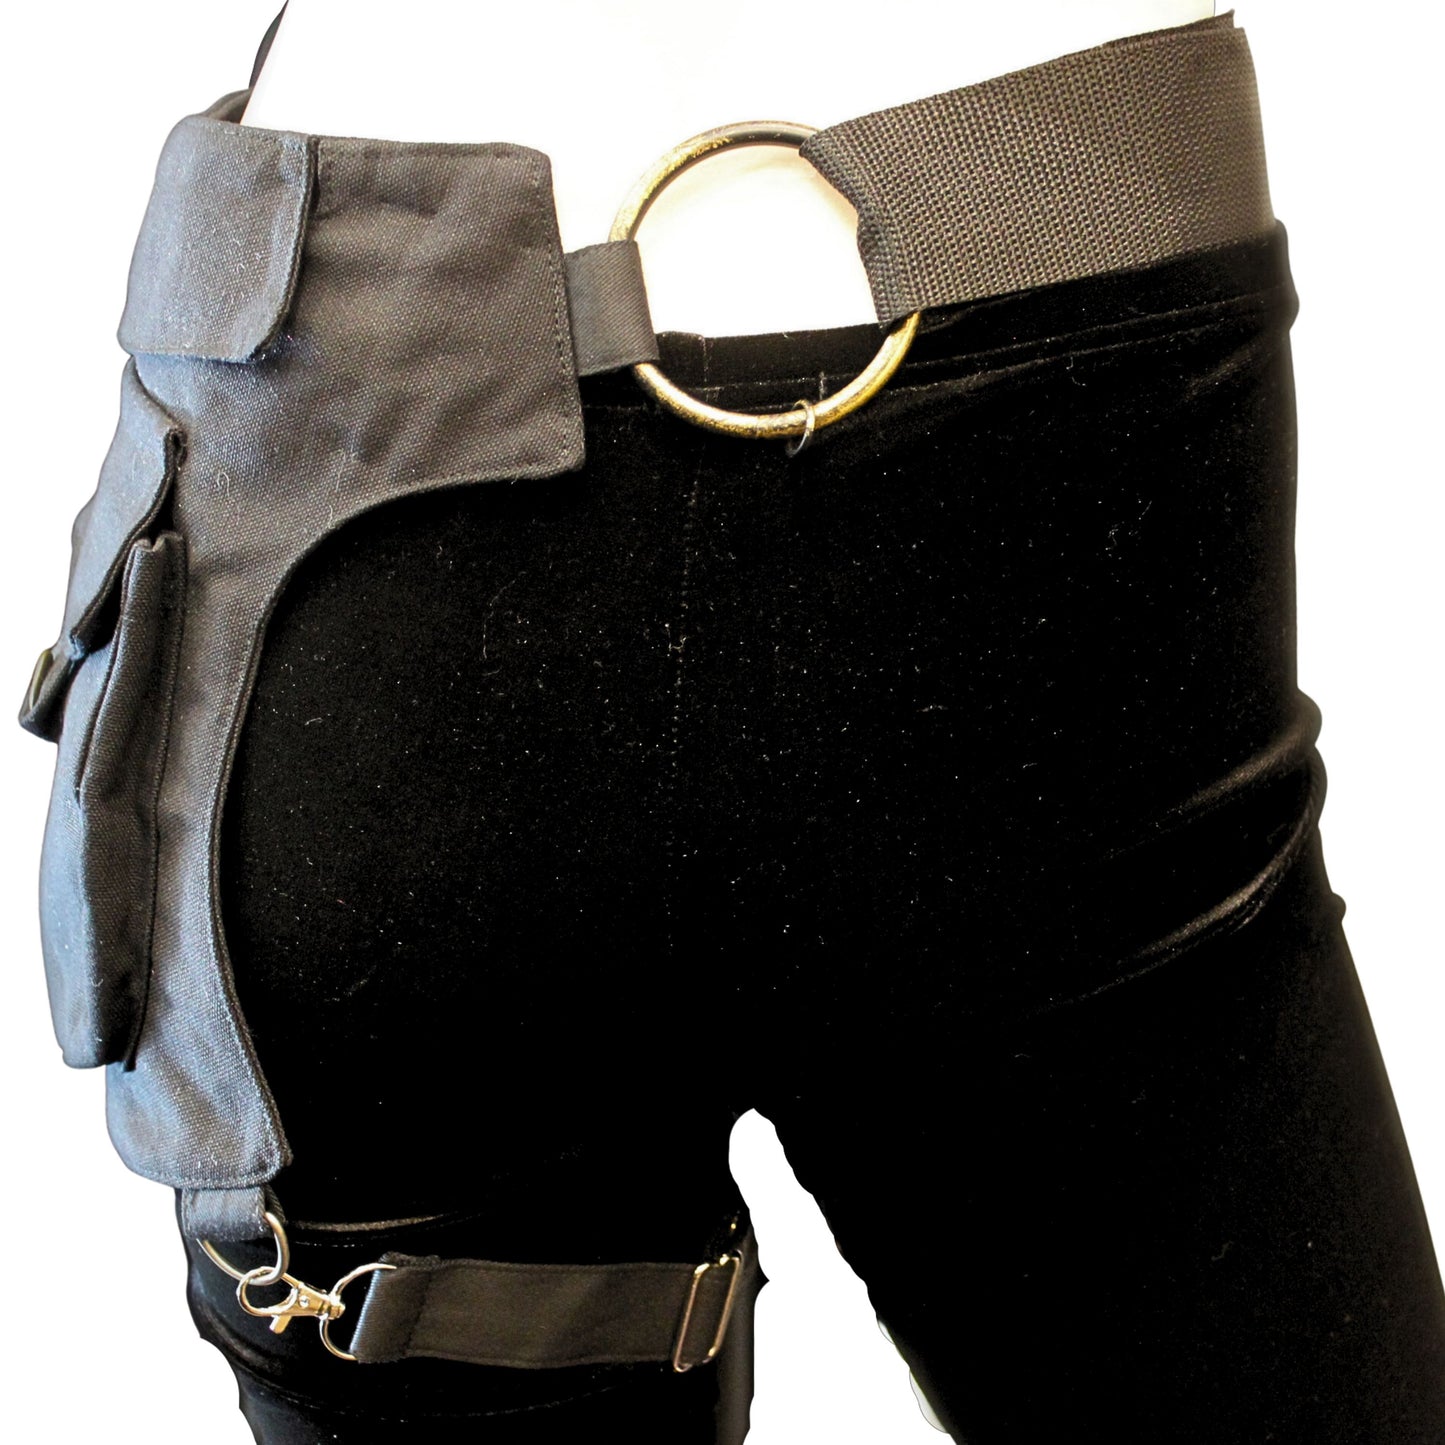 The VM Pocket Belt with Thigh Strap